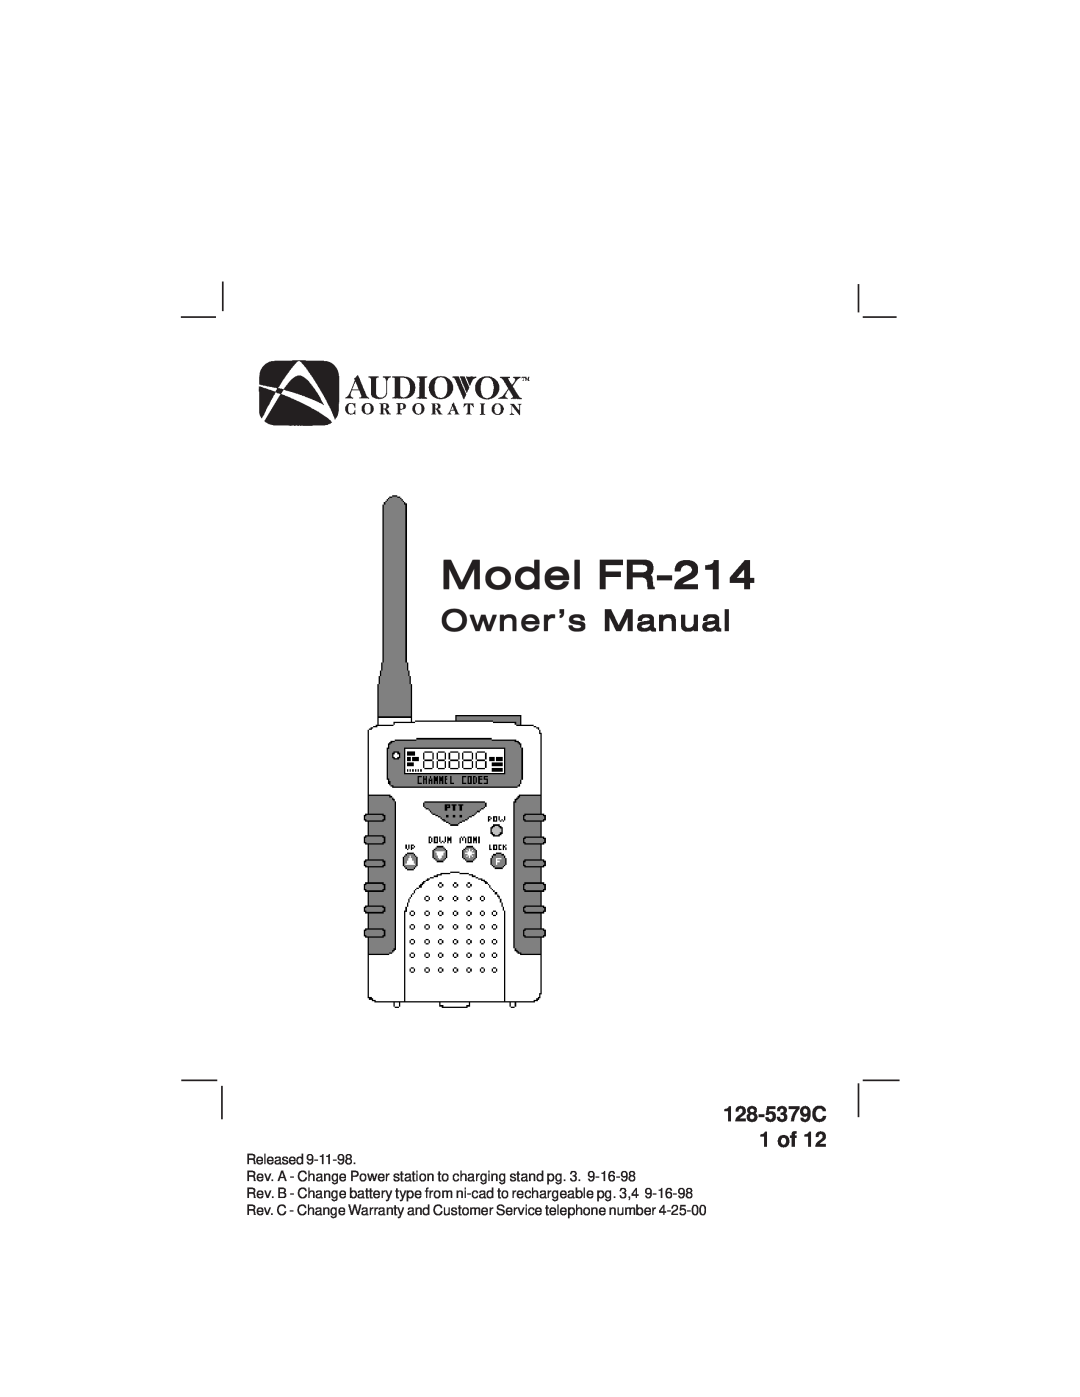 Audiovox warranty 128-5379C 1 of, Model FR-214, Owner’s Manual 